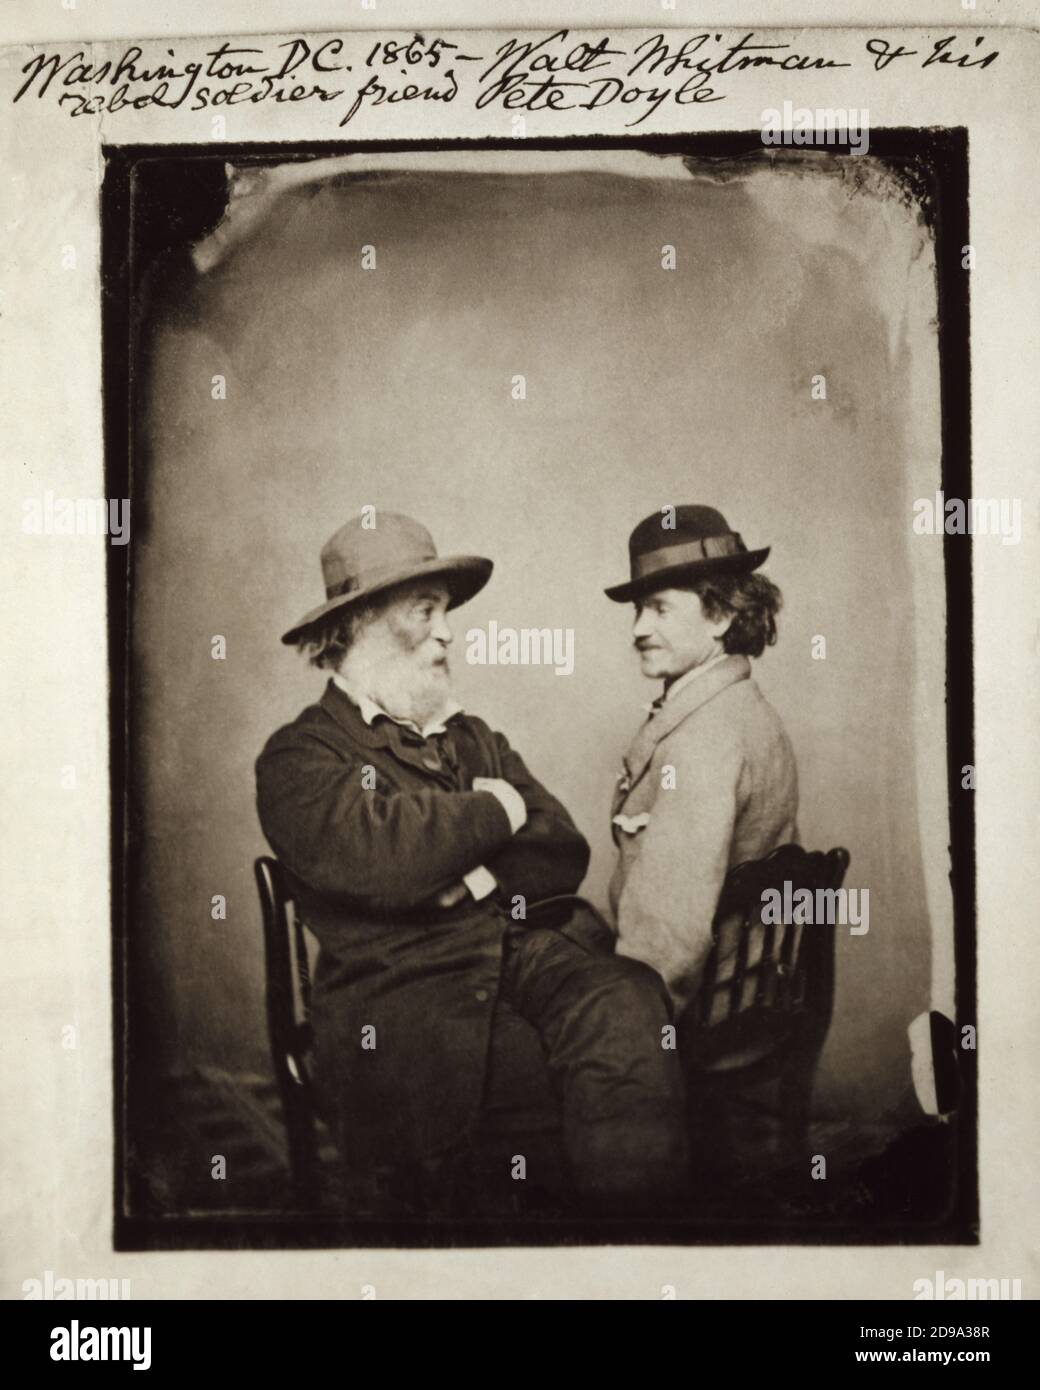 1865 , Washington DC , USA  : The most celebrated U.S.A. poet WALT WHITMAN ( 1819 - 1892 ) with his rebel soldier friend Pete Doyle - POESIA - POETA - POETRY - portrait - ritratto - hat - cappello - white bear - barba bianca - ancient older man - uomo anziano vecchio - LETTERATURA - LITERATURE - letterato - GAY - Homosexual - Homosexuality - omosessualità - LGBT  - Omosessuale - portrait - ritratto - PACIFIST - PACIFISTA - coppia - couple   ----  Archivio GBB Stock Photo